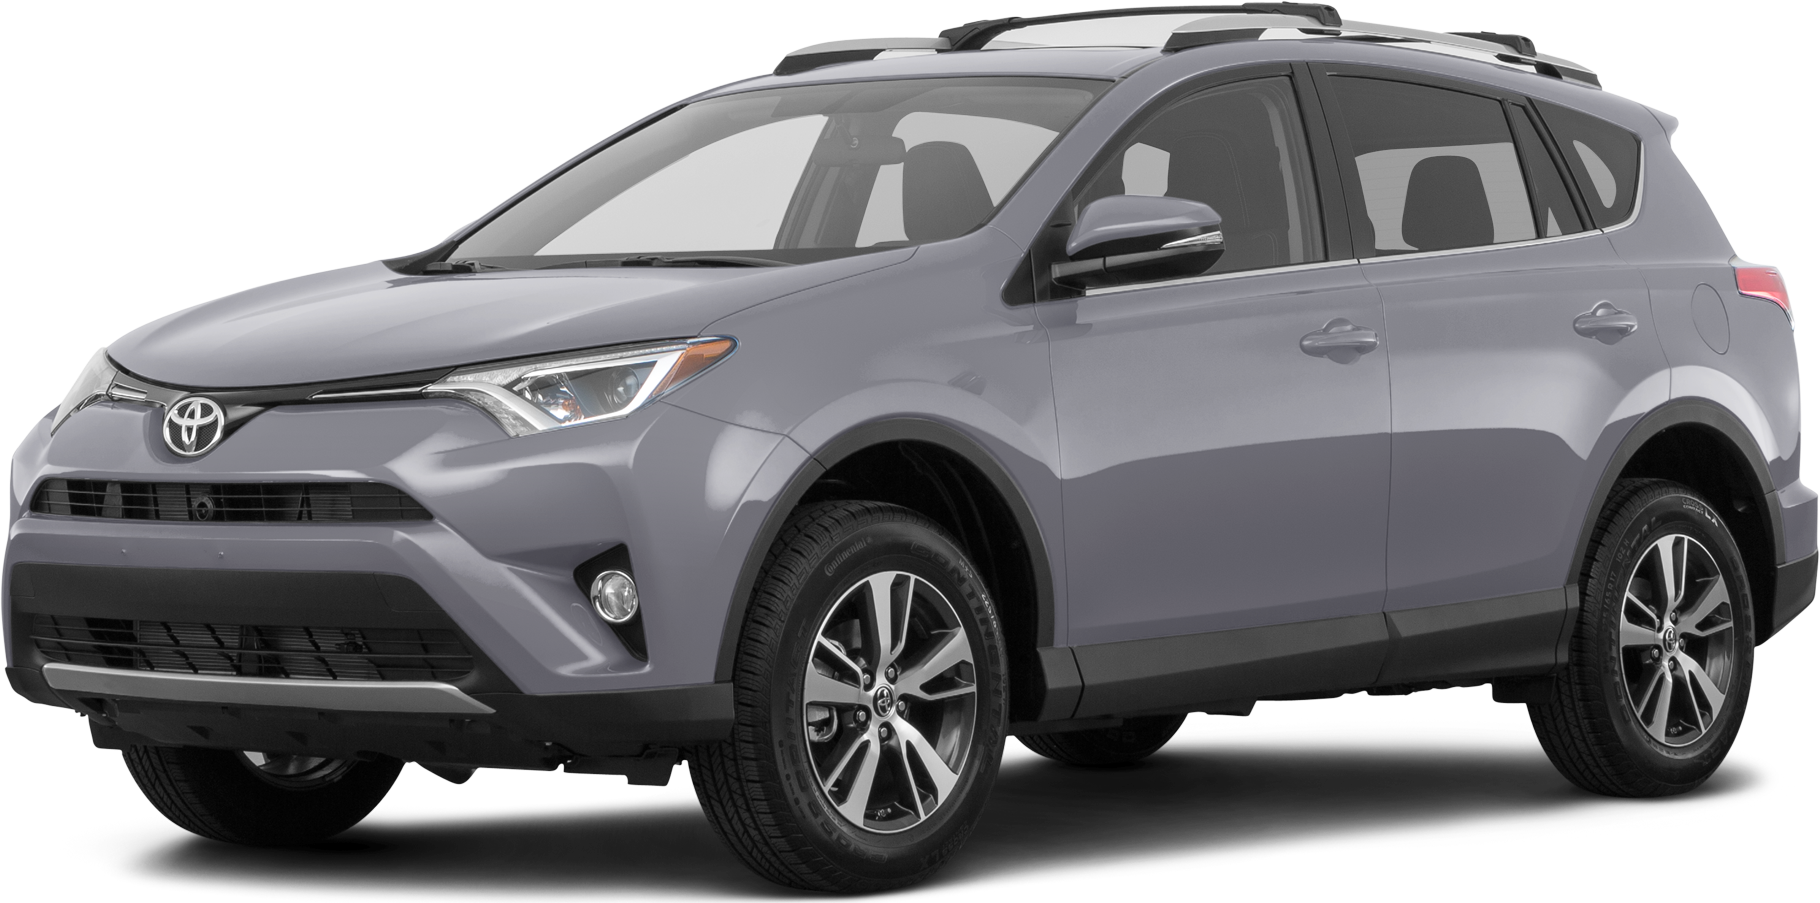 2018 Toyota RAV4 Values & Cars for Sale | Kelley Blue Book